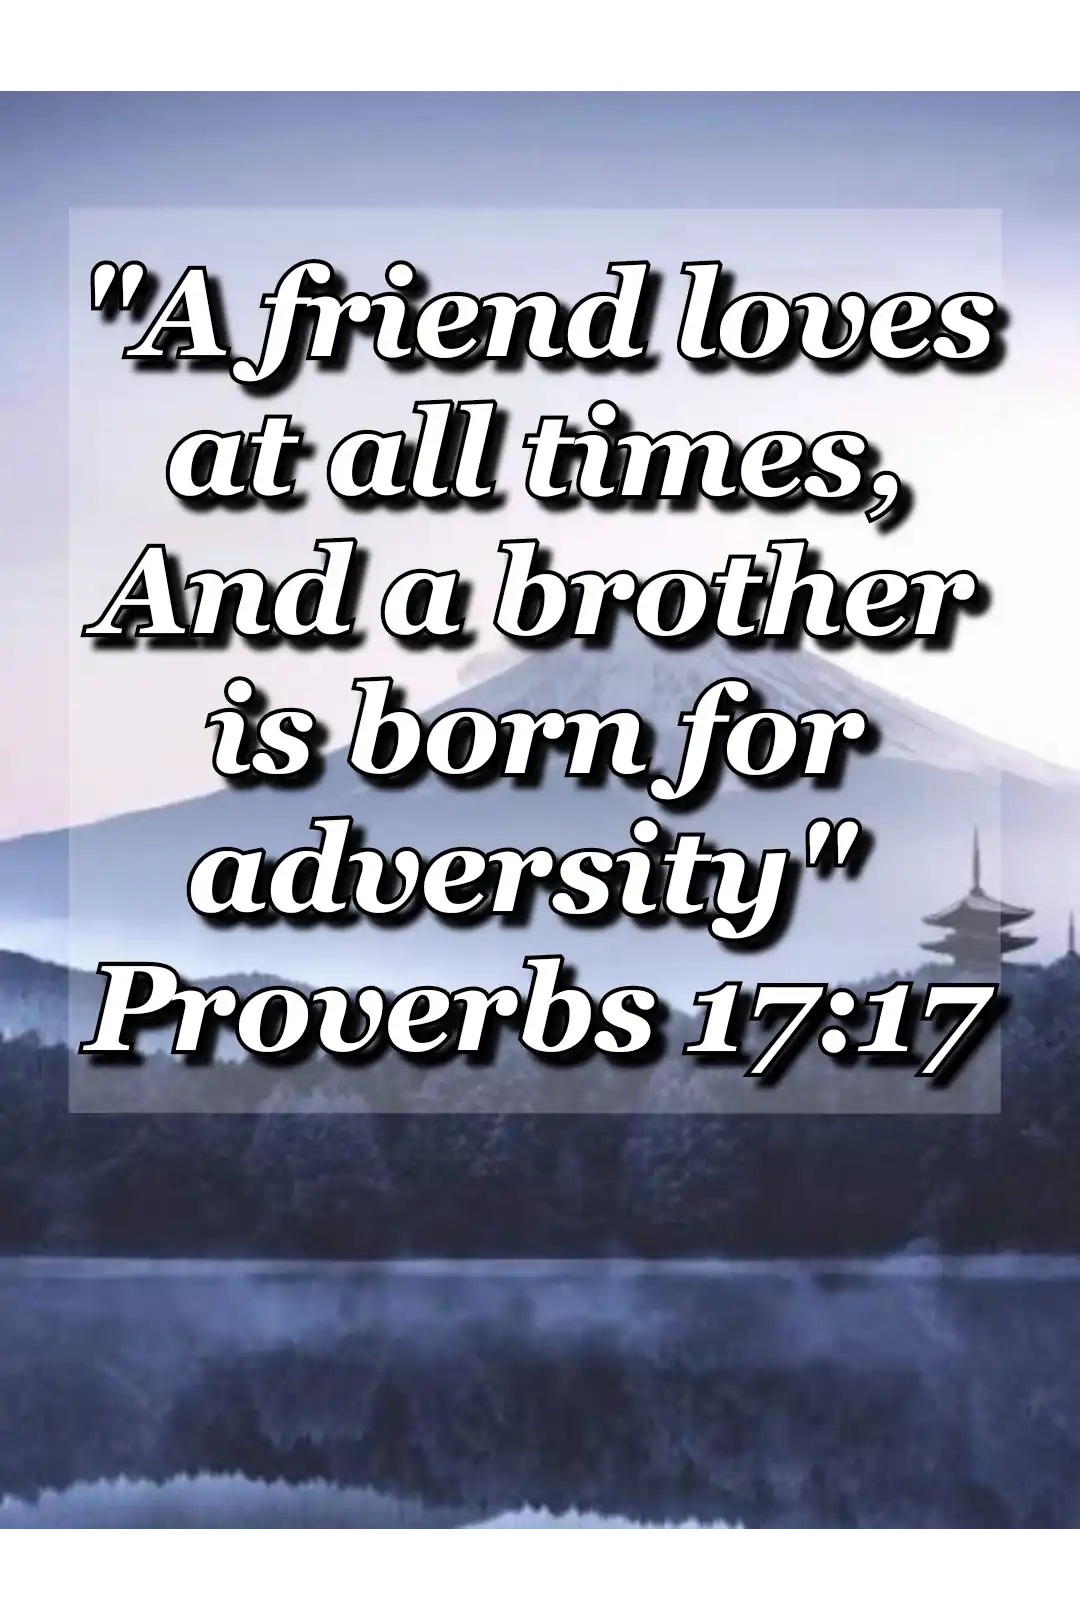 Today bibile-verse (Proverbs 17:17)